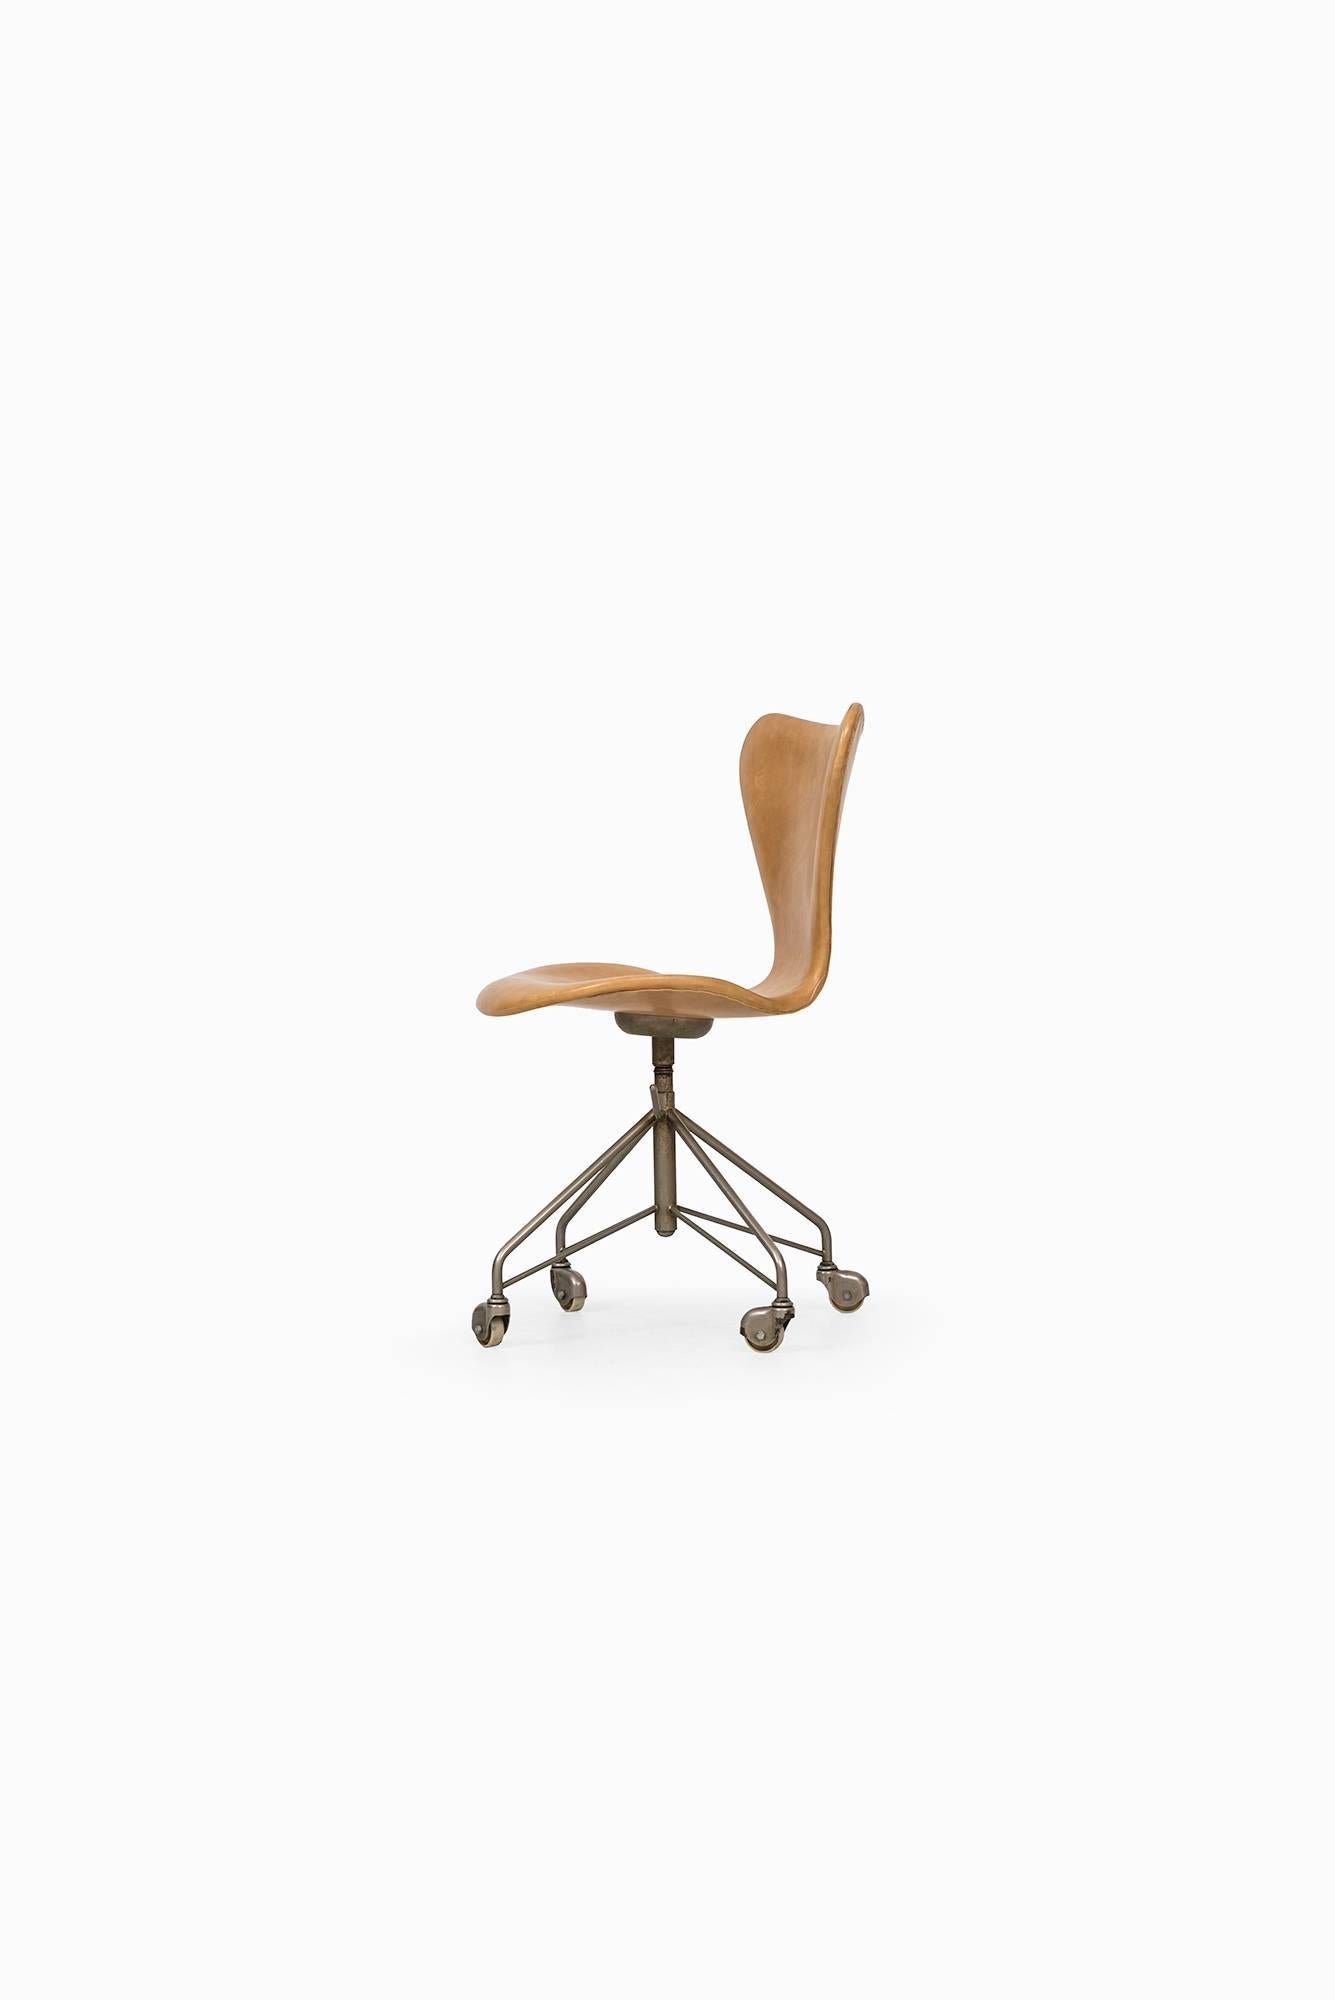 Mid-20th Century Arne Jacobsen Office Chair Model 3117 by Fritz Hansen in Denmark